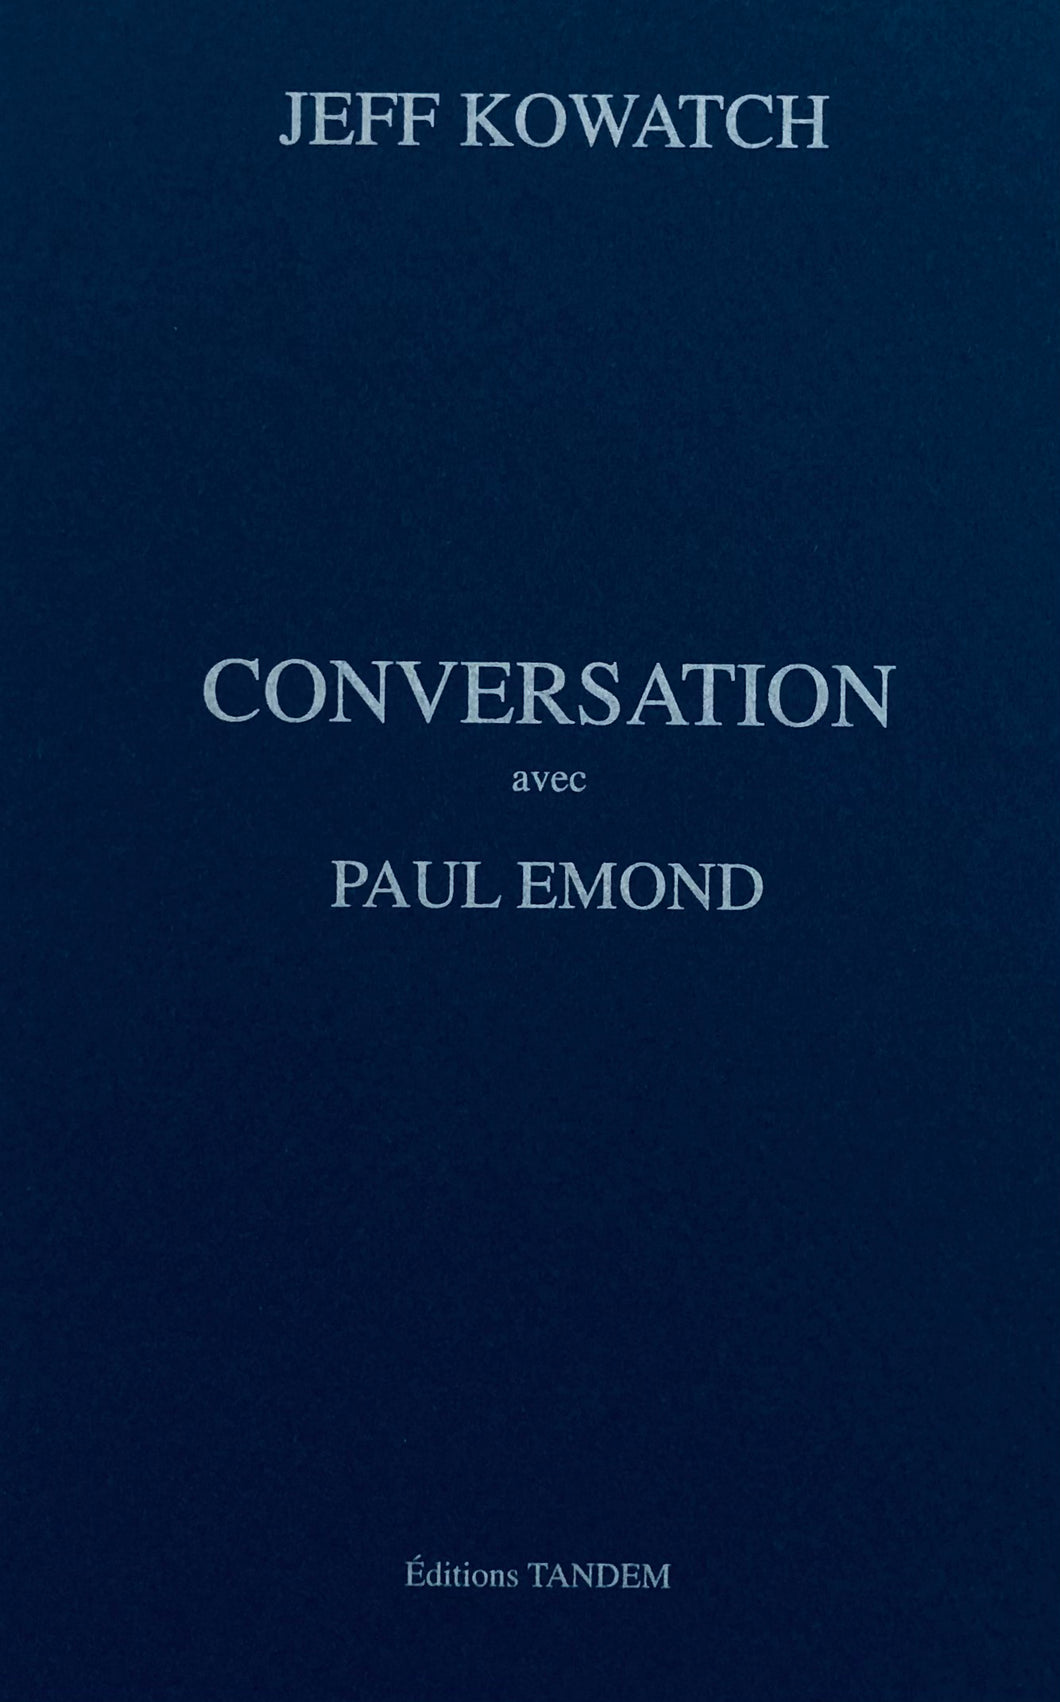 Jeff Kowatch. <i> Conversation avec Paul Emond </i>. Editions Tandem, 2016.